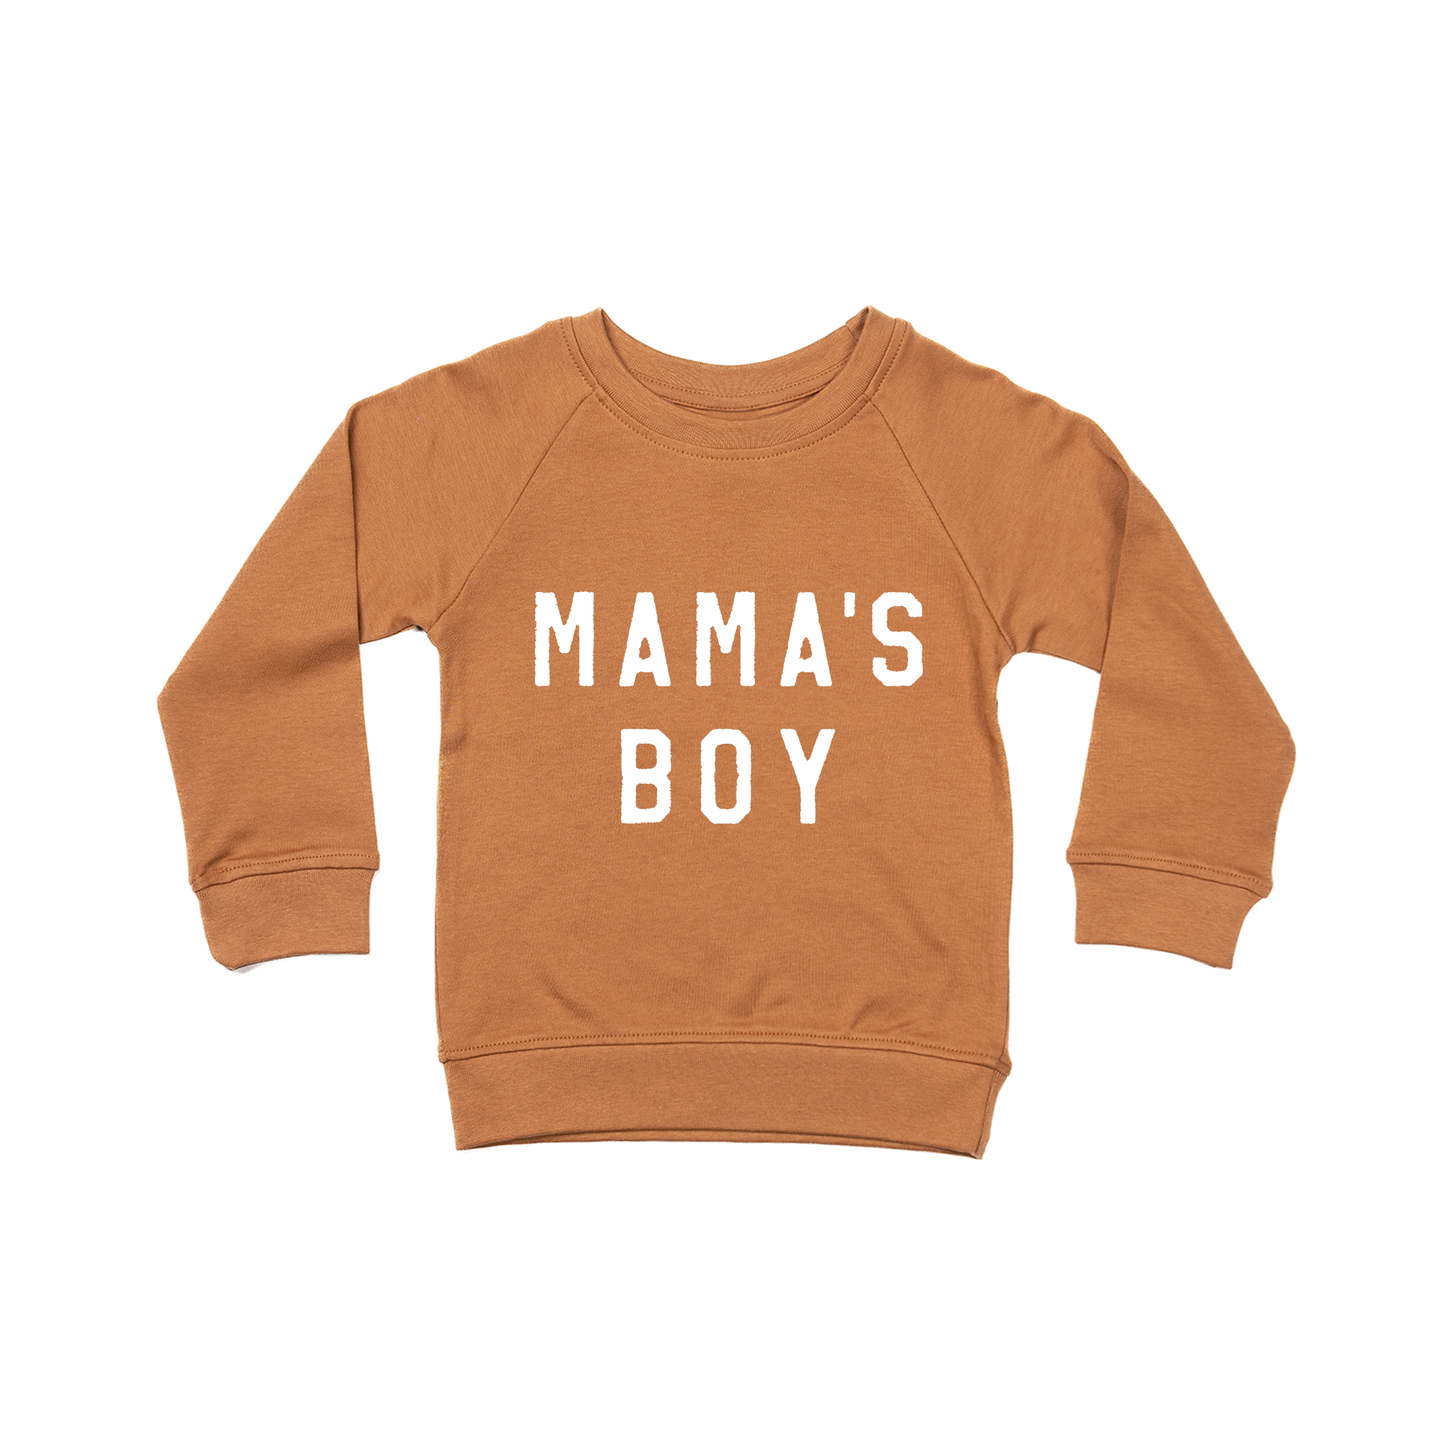 Mama's Boy (White) - Kids Sweatshirt (Camel)